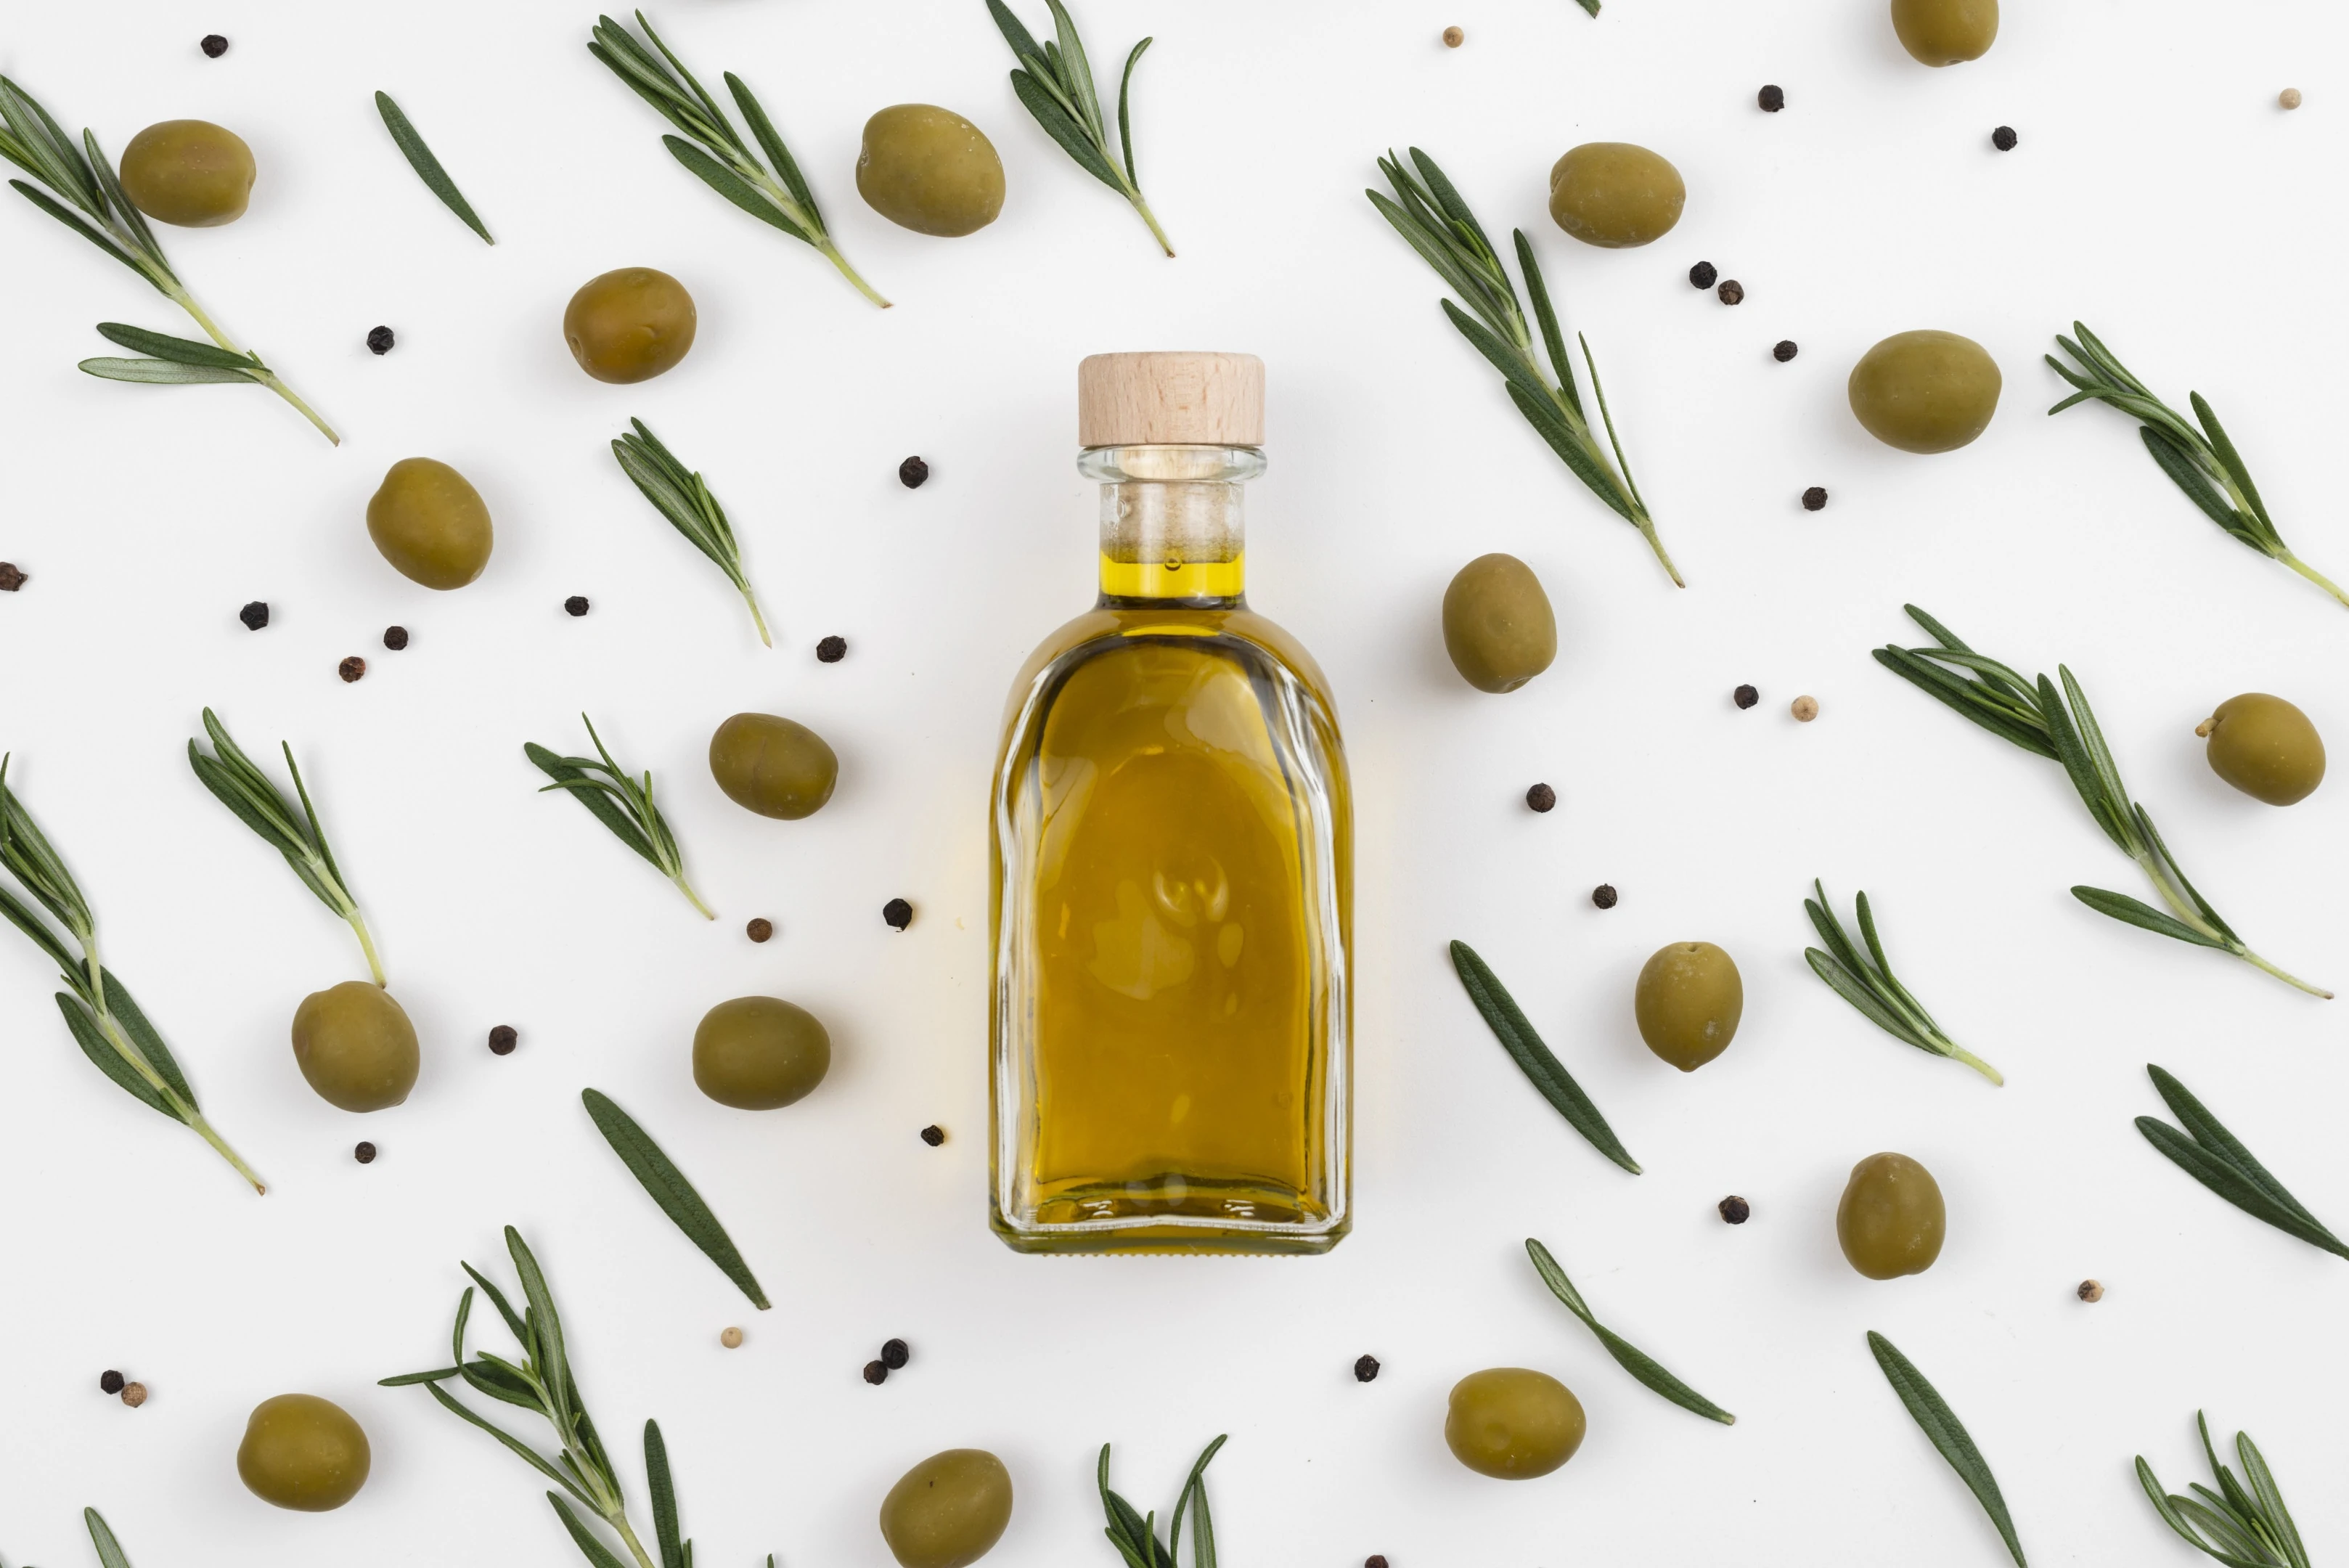 Arrangement of olive leaves and olive oil bottle on white background